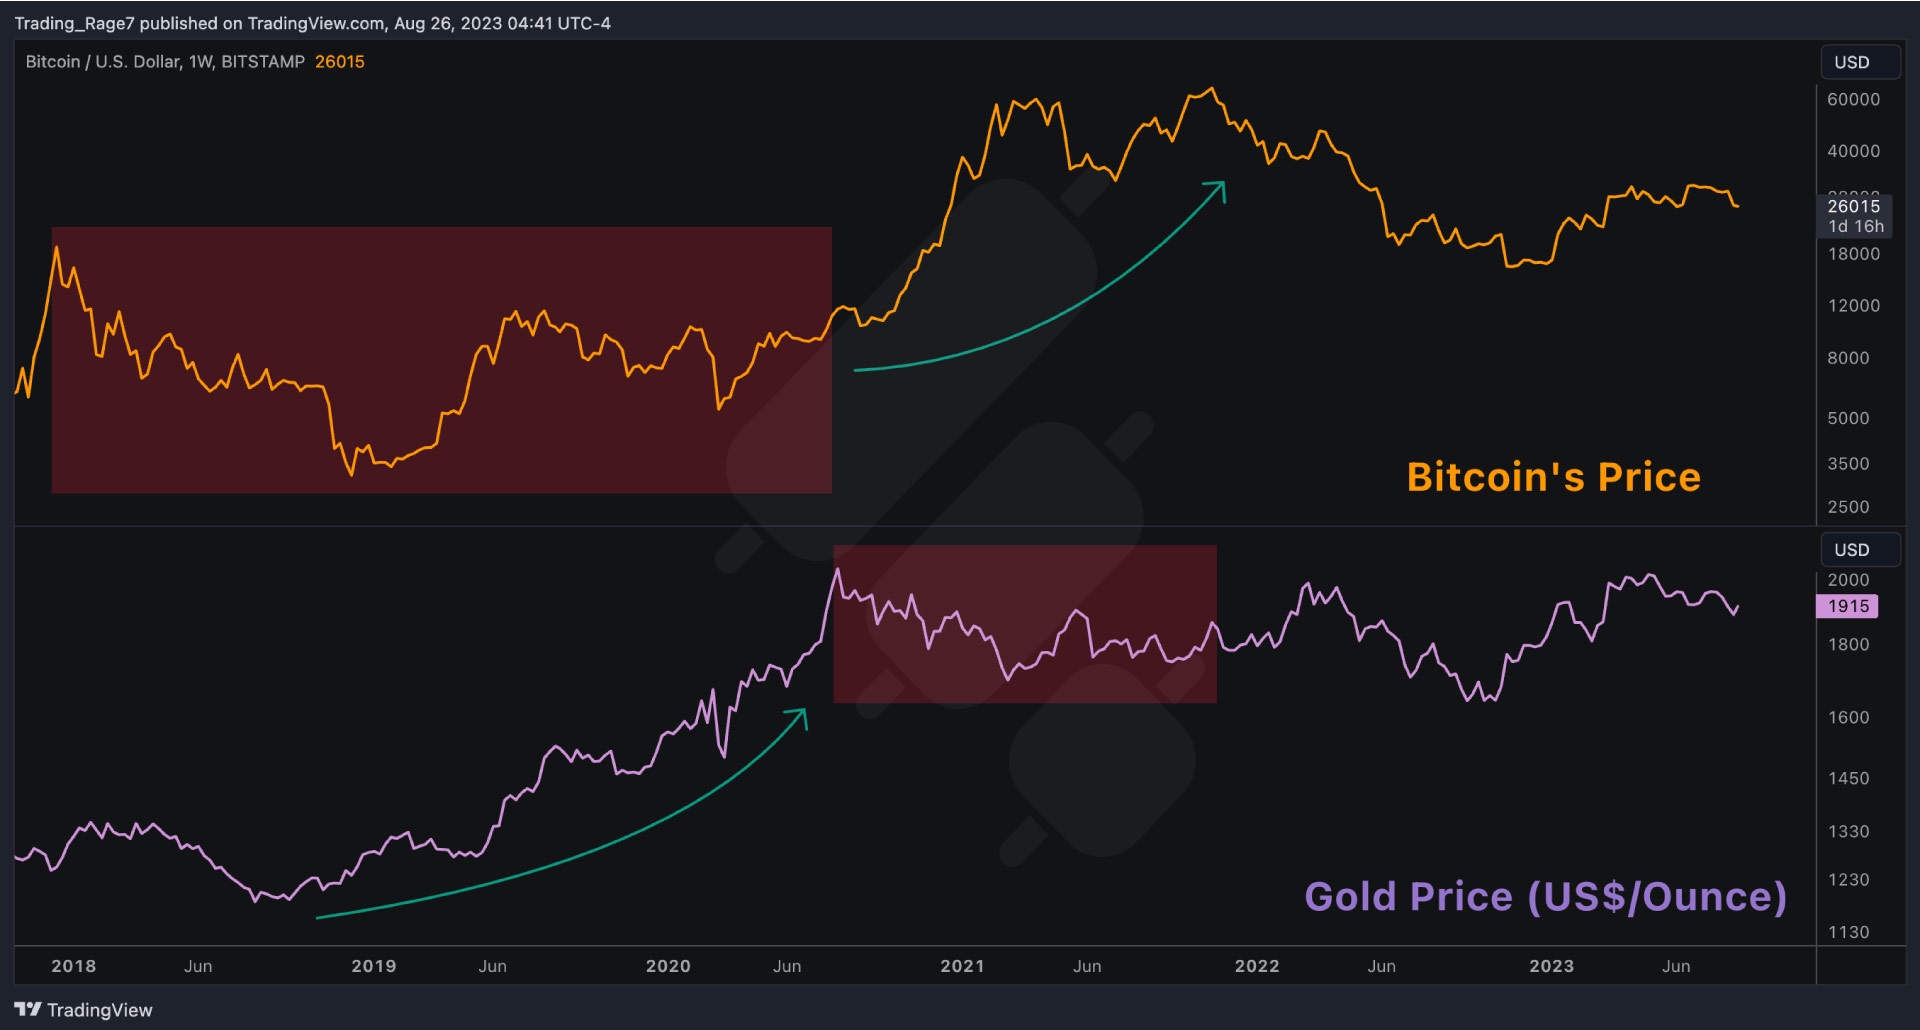 Gold price correlation with crypto market